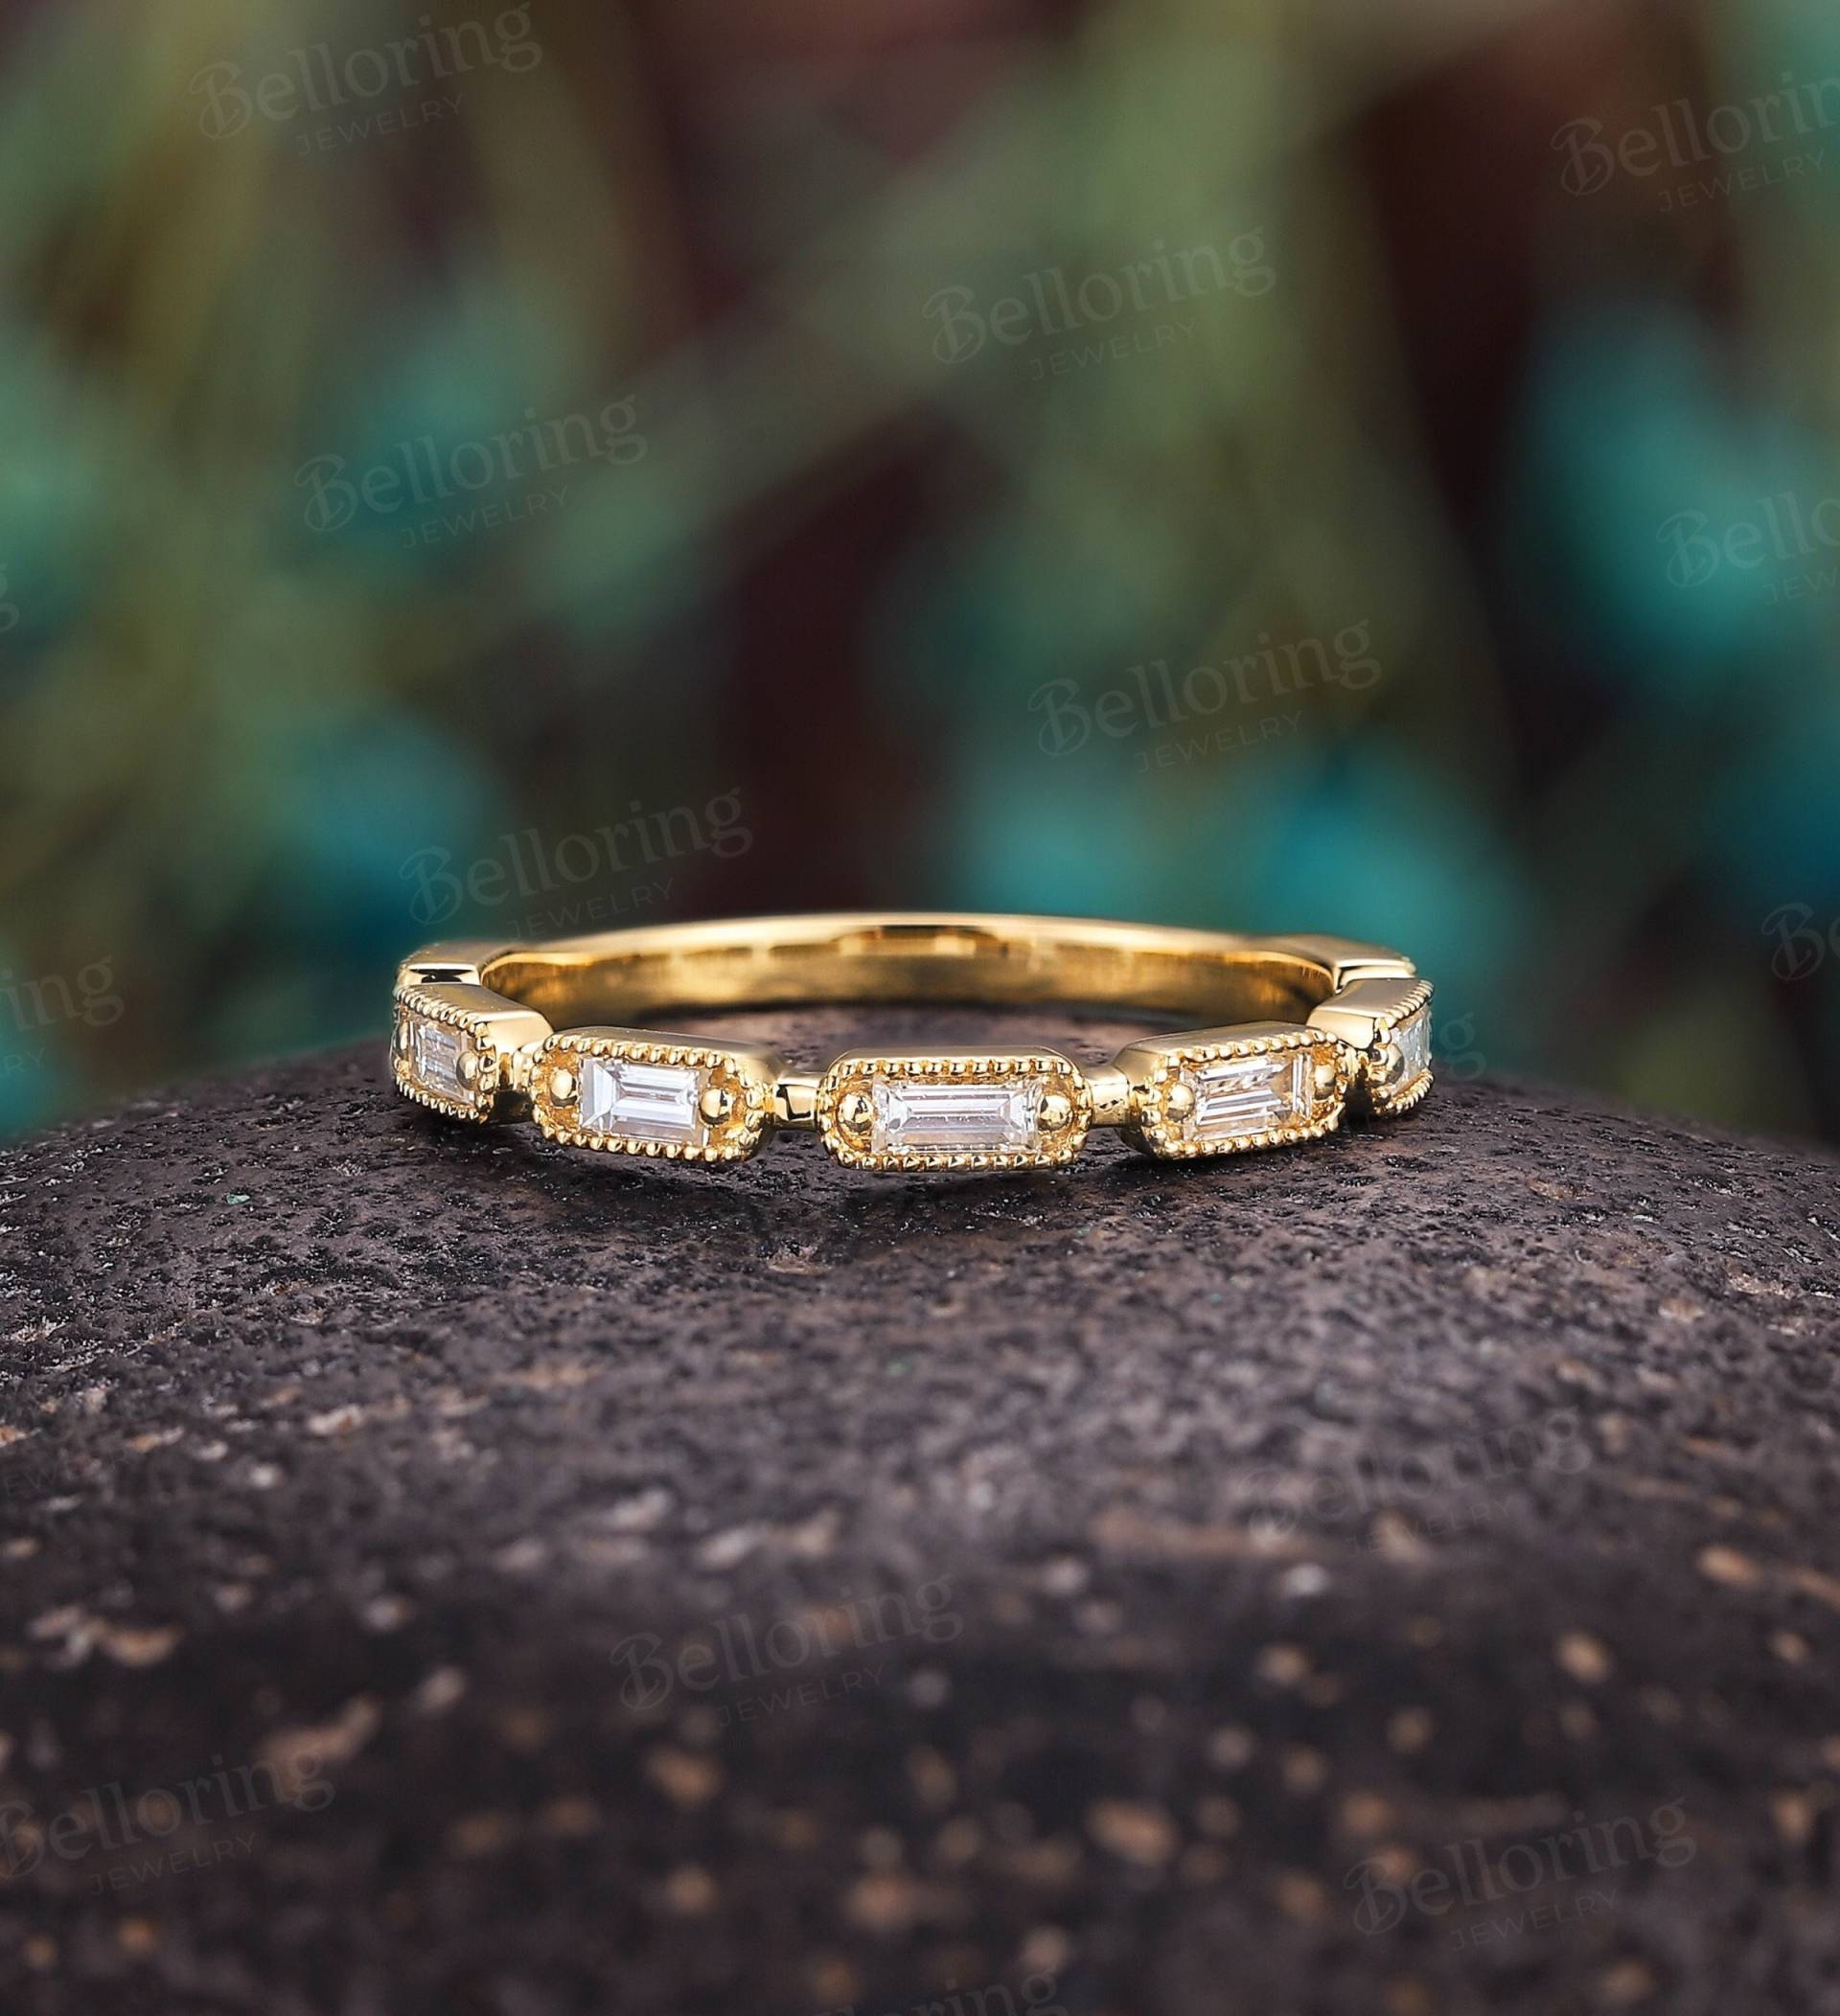 Vintage Baguette Diamant Ehering Rosegold Milgrain Band Art Deco Unikat Halbe Ewigkeit Versprechen Jubiläum Ring von Belloring